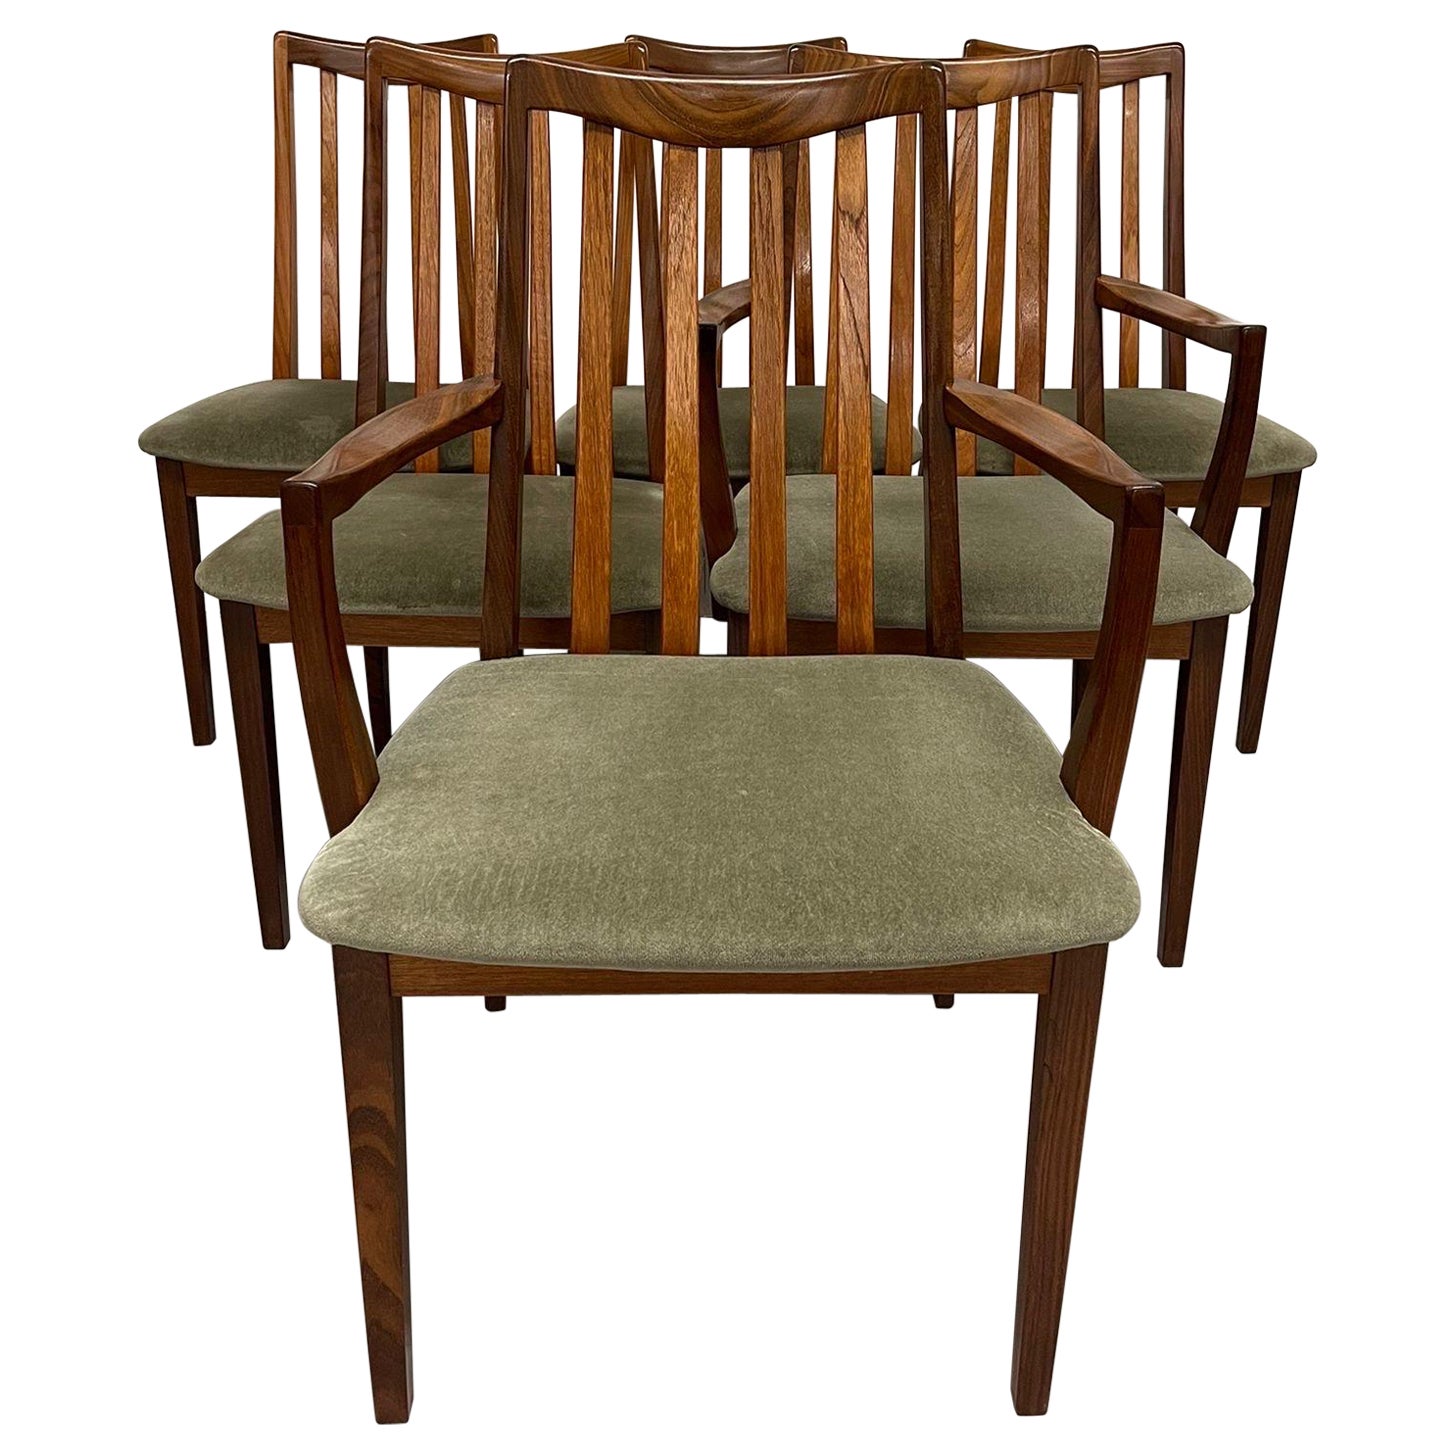 Set of 6 Vintage Ladder Back Mid Century Modern G-Plan Dining Chairs.